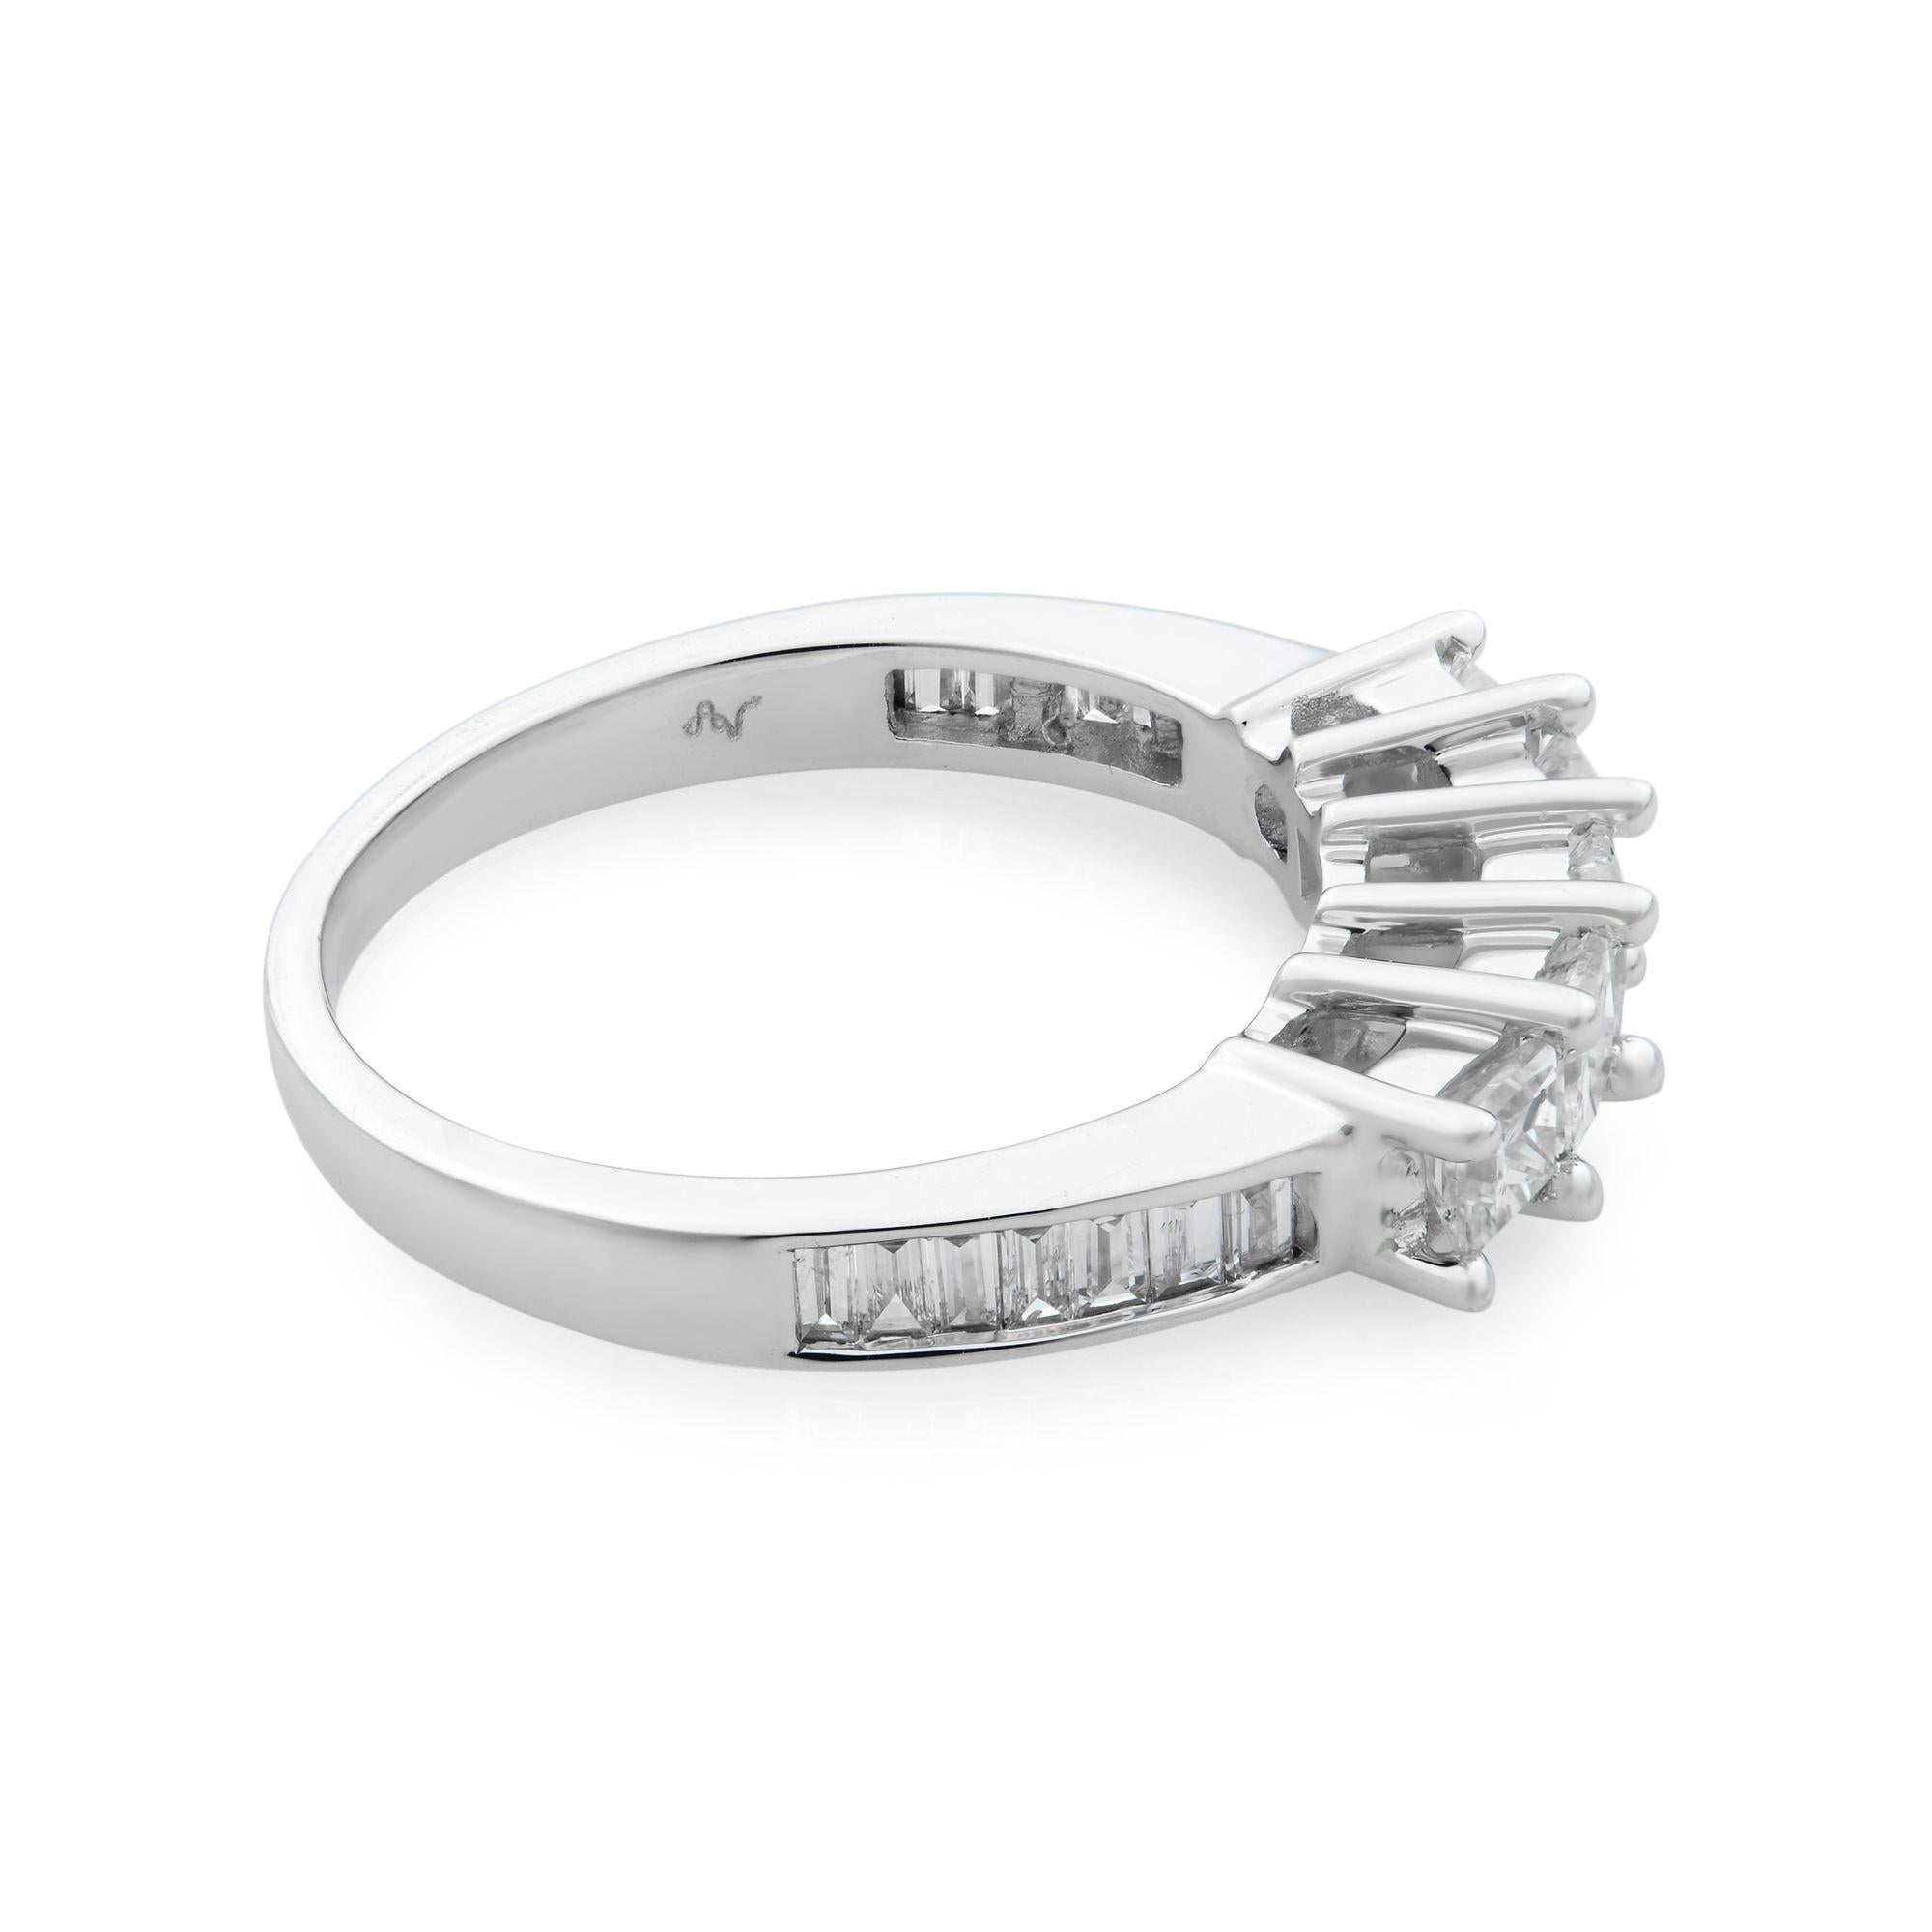 Modern Rachel Koen Princess Cut Diamond Wedding Band Ring 14K White Gold 1.15 Cttw For Sale